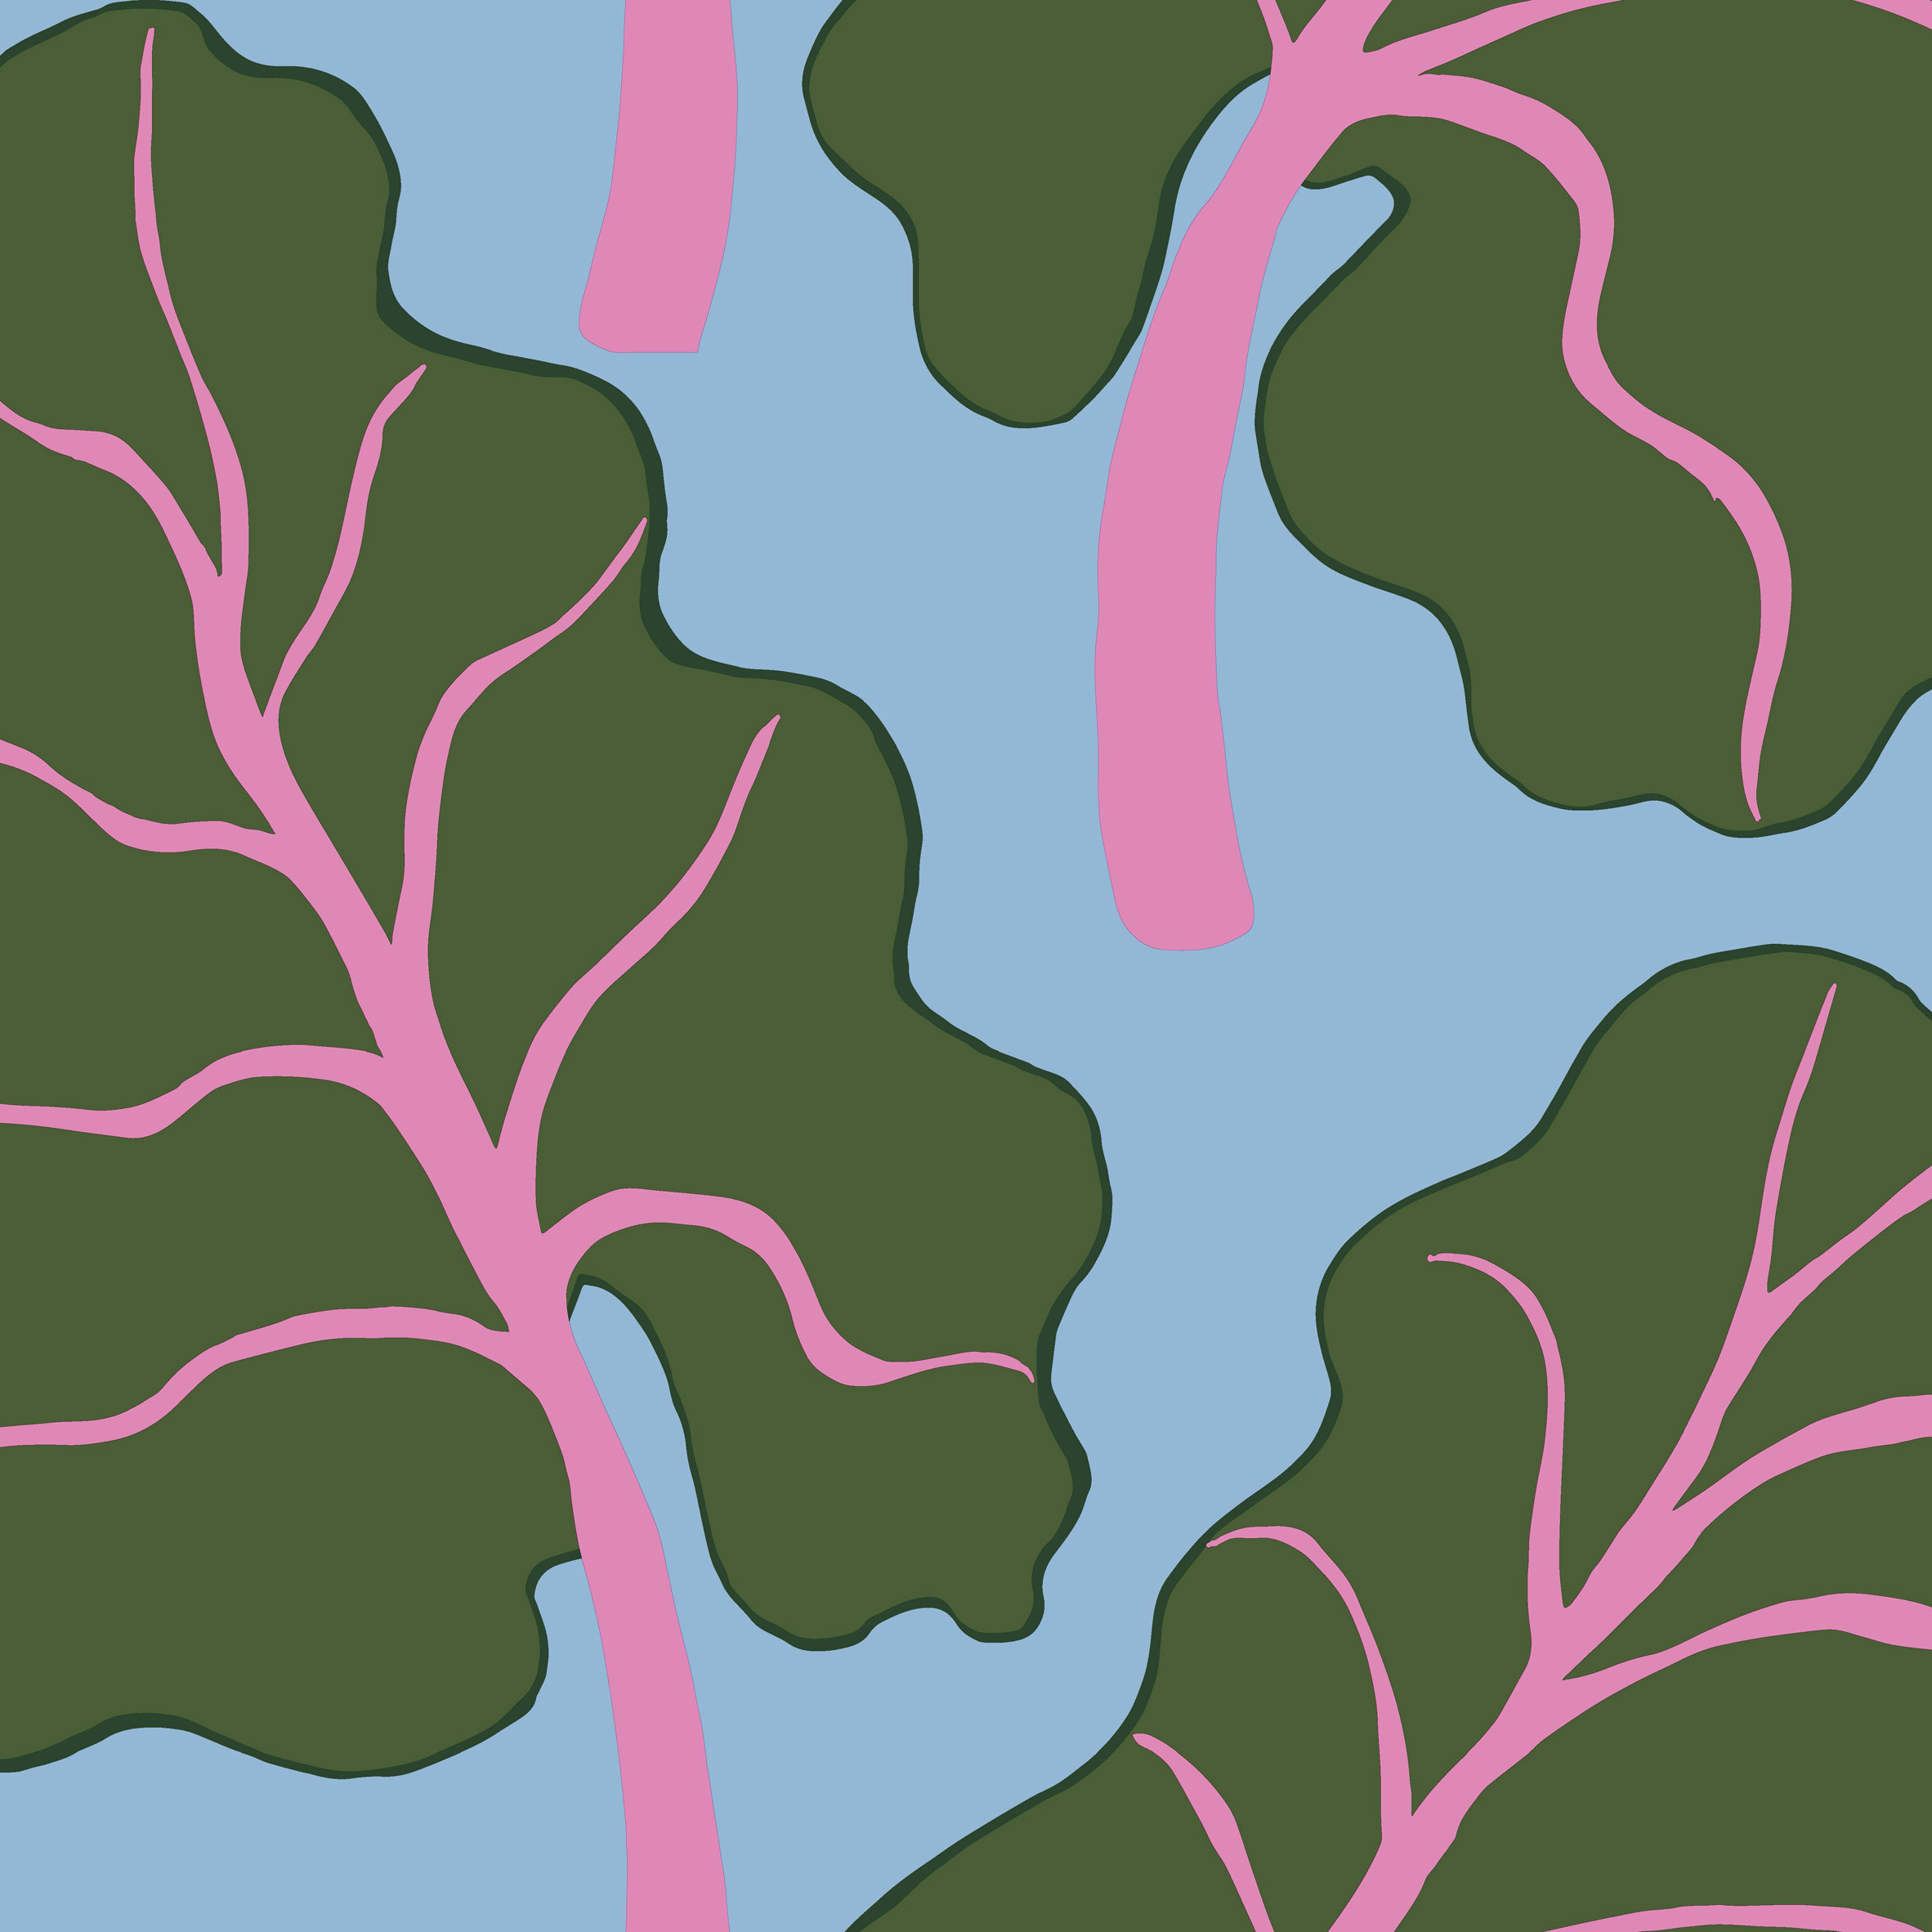 A playful rhubarb leaf design